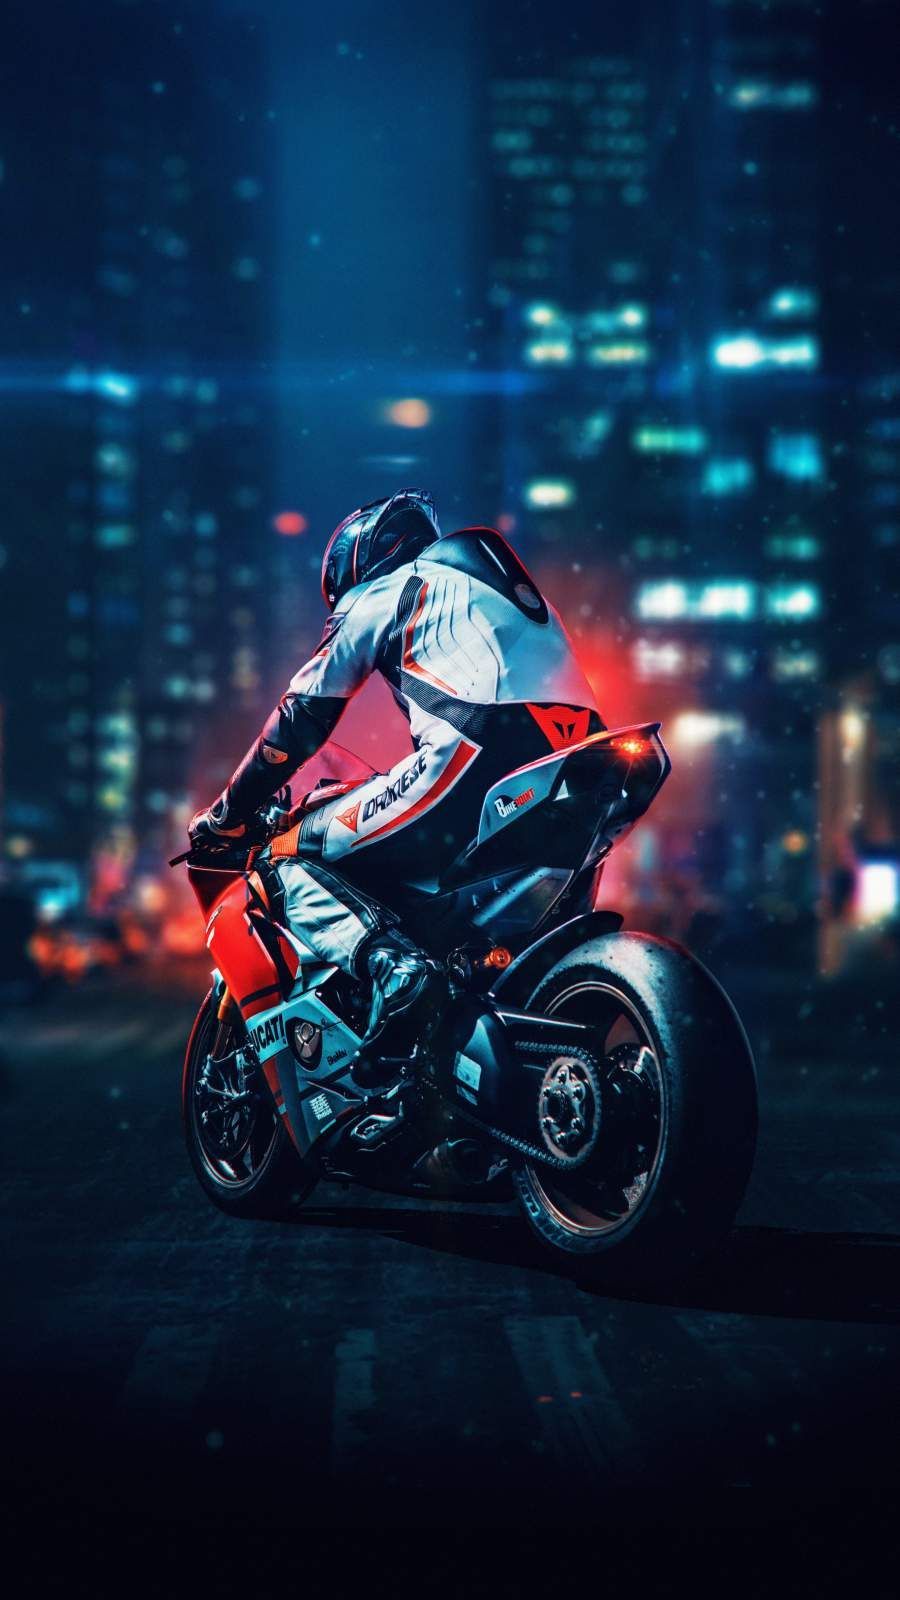 Motorcycle Rider iPhone Wallpaper Moto